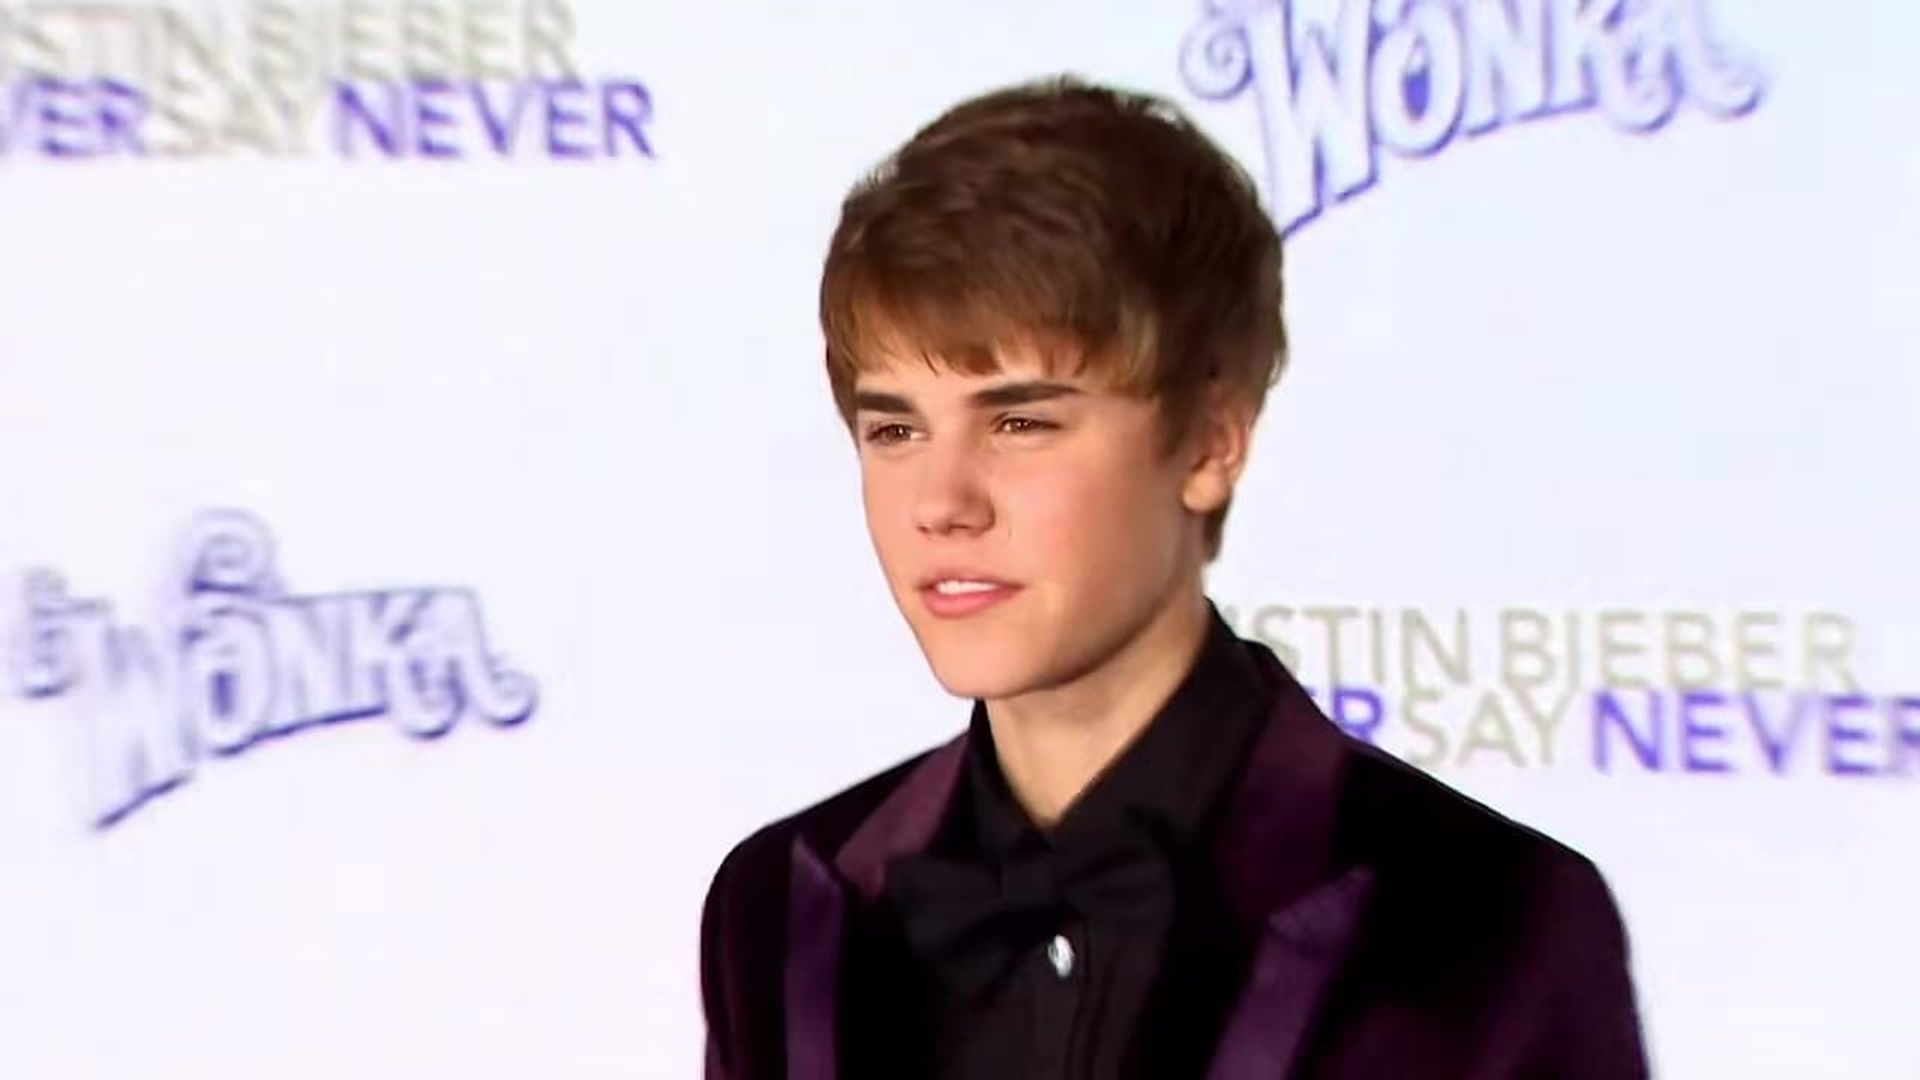 Justin Bieber: Rise of a Superstar background